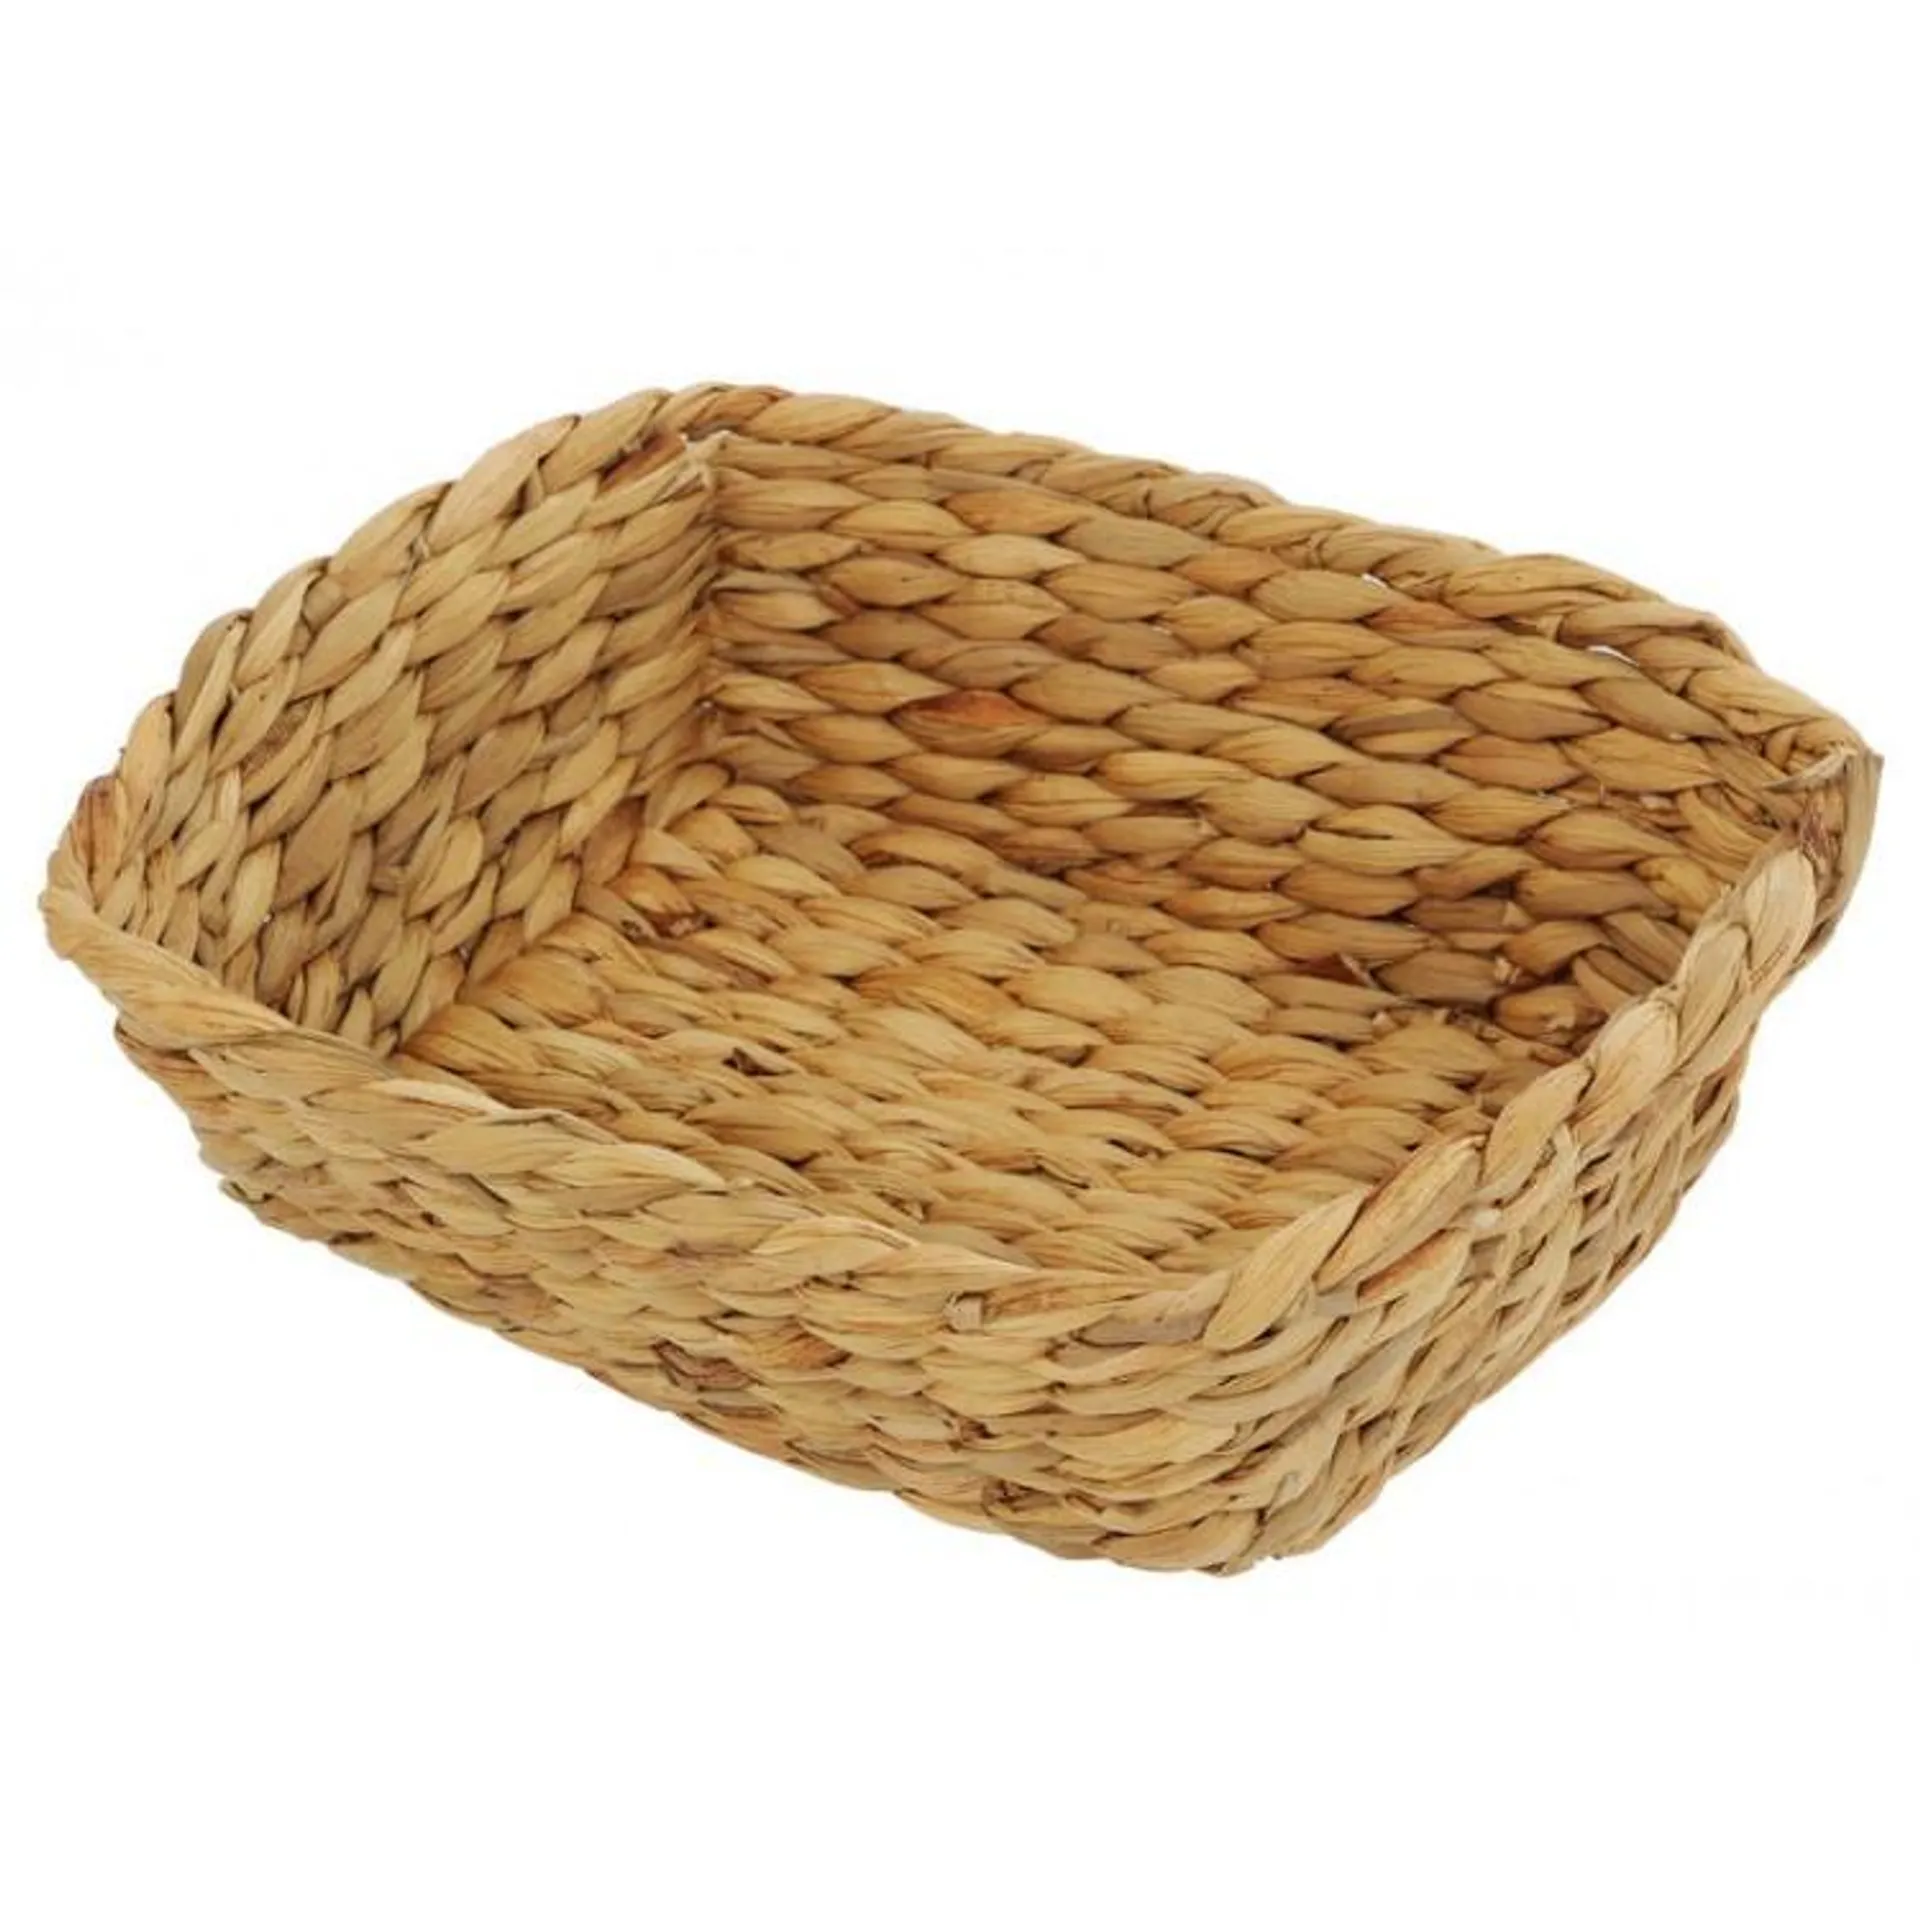 Small Woven Reed Basket - Rectangular - 28cm x 22cm x 9cm